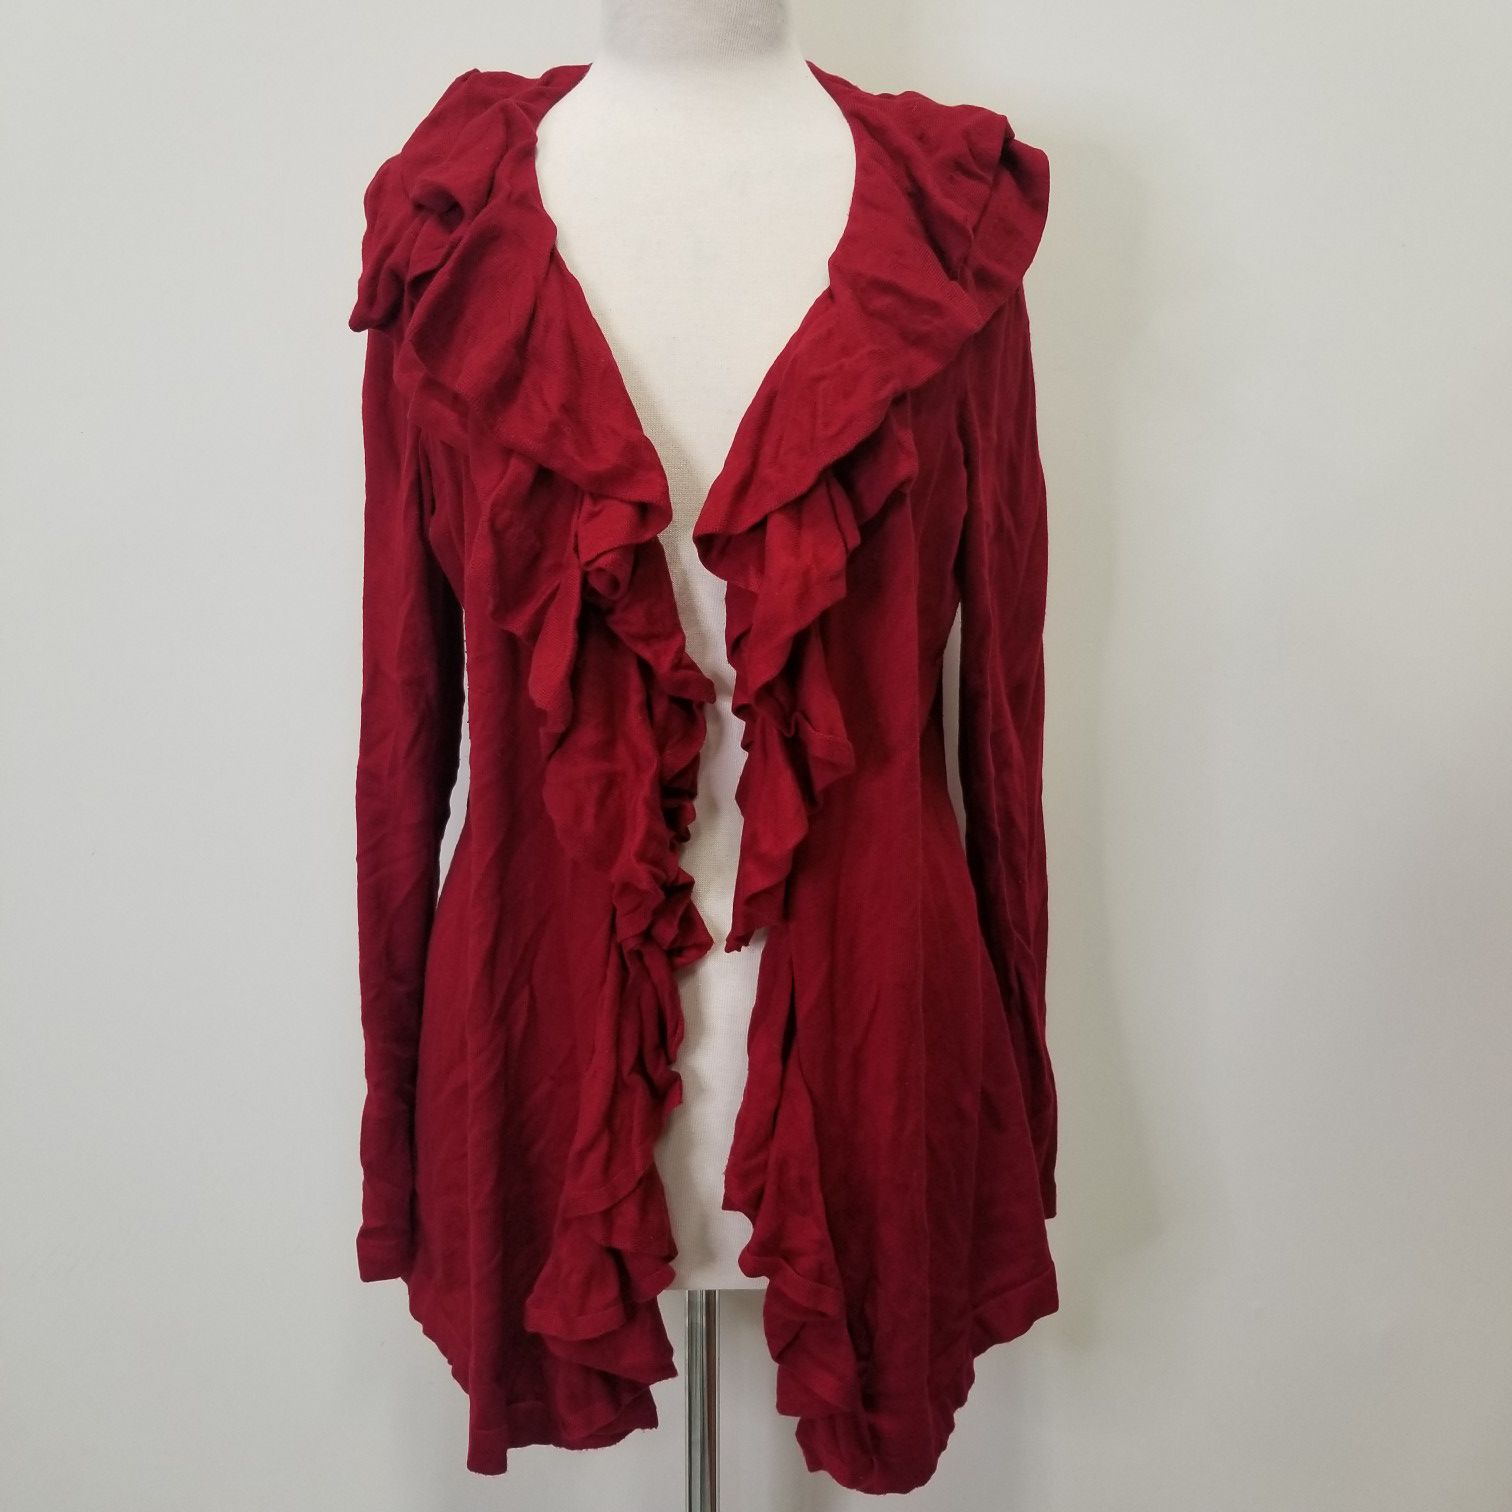 1X Ralph Lauren Red Silk & Cotton Ruffled Cardigan